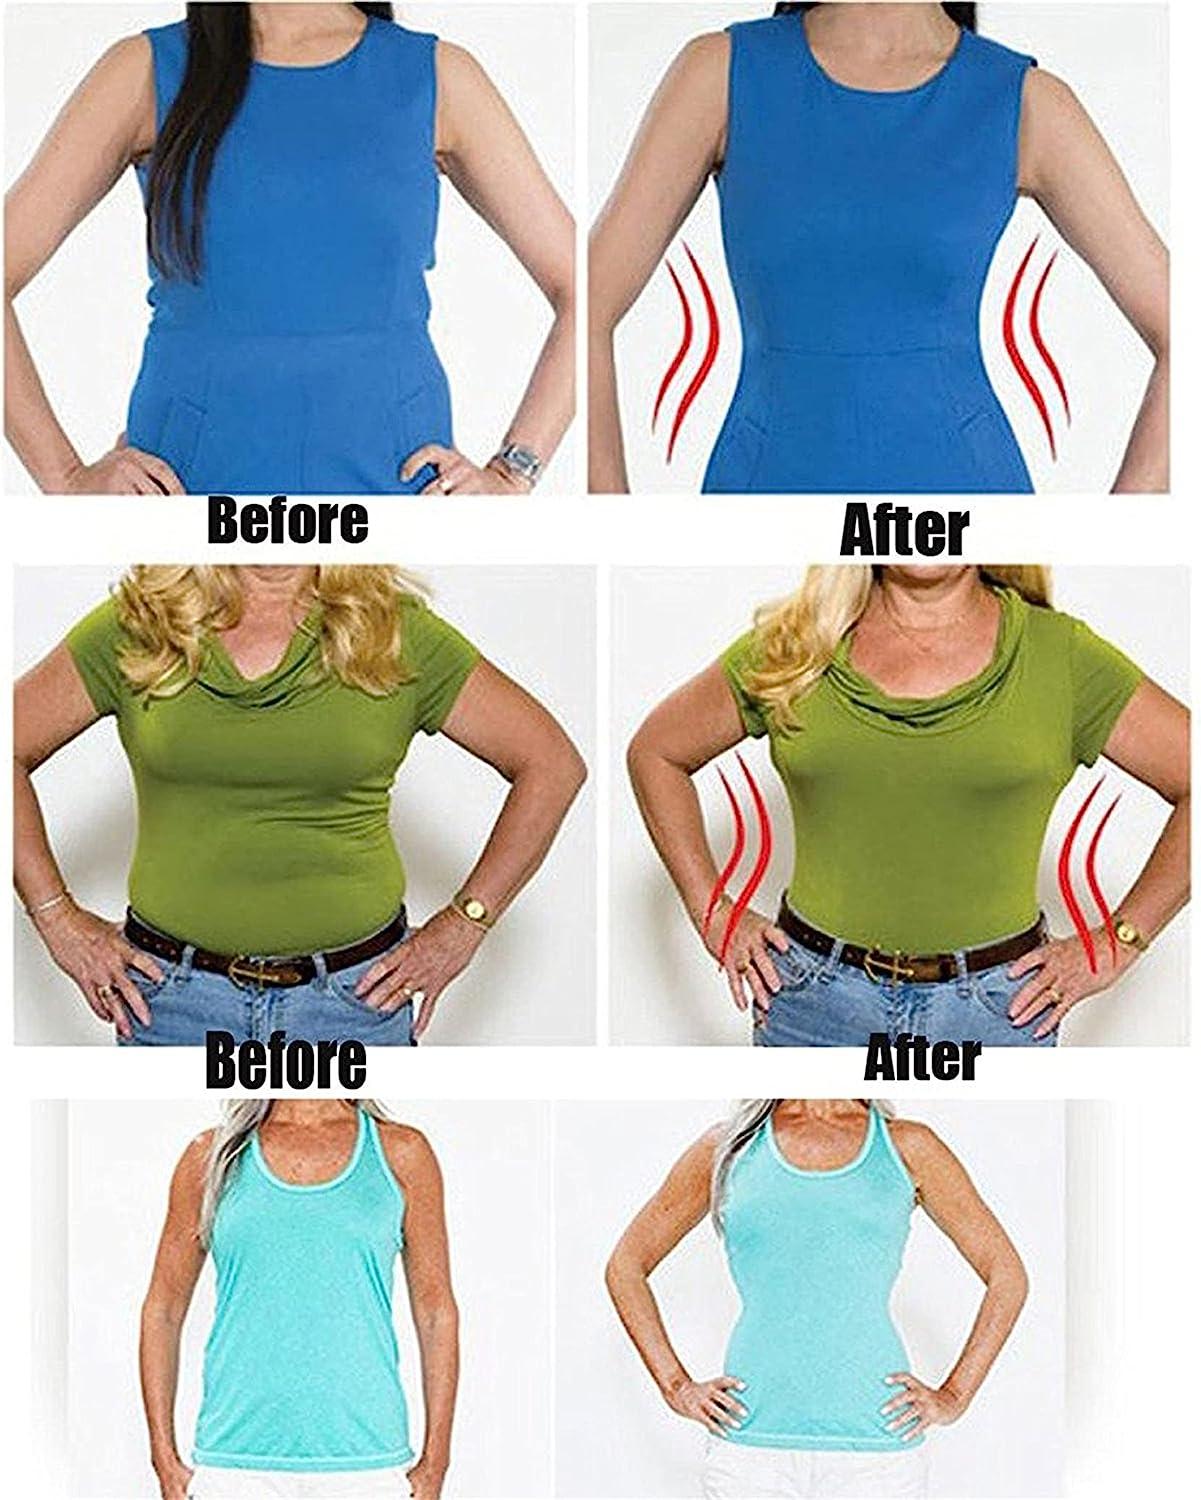 Unisex Hot Body Shaper Neoprene Slimming Belt Tummy Control Shapewear  Stomach Fat Burner Abdominal Trainer Workout Sauna Suit Weight Loss Cincher  fat